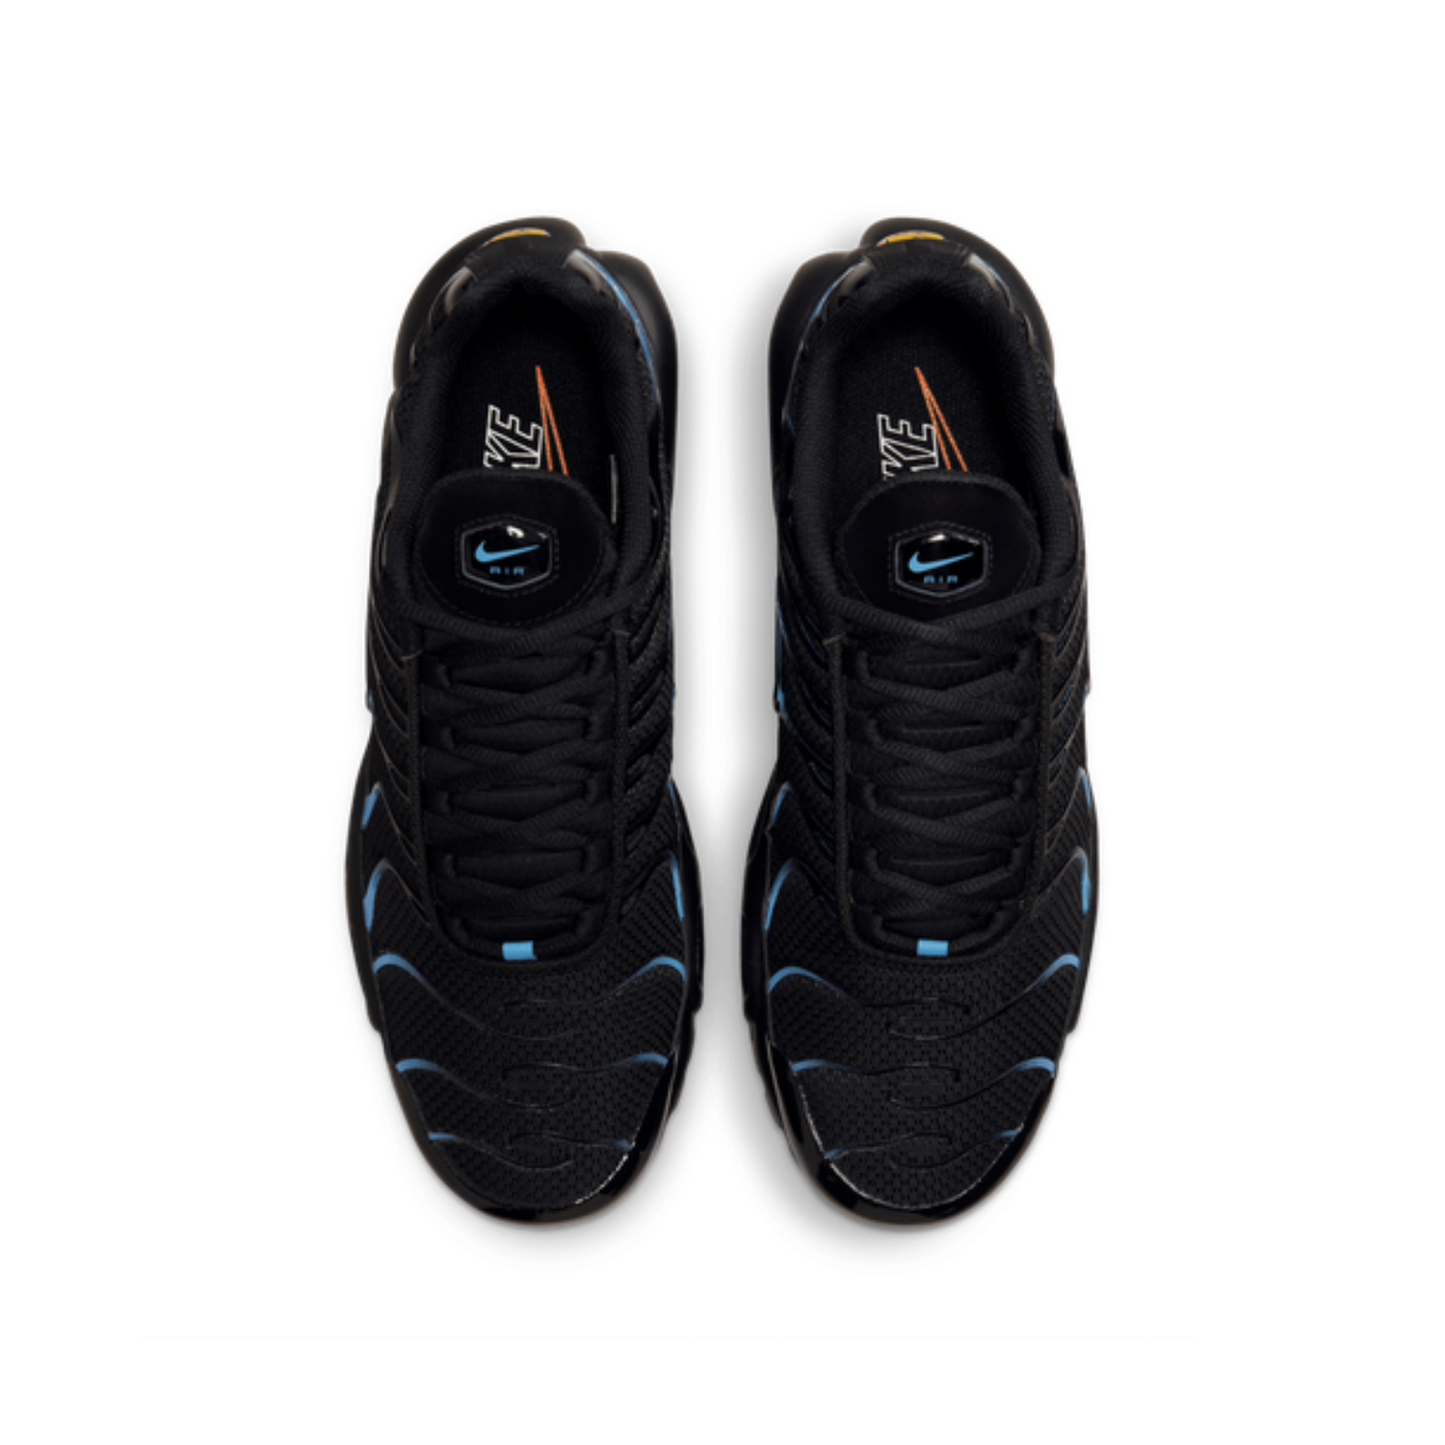 Nike Air Max Plus TN Black Blue Bats Men's